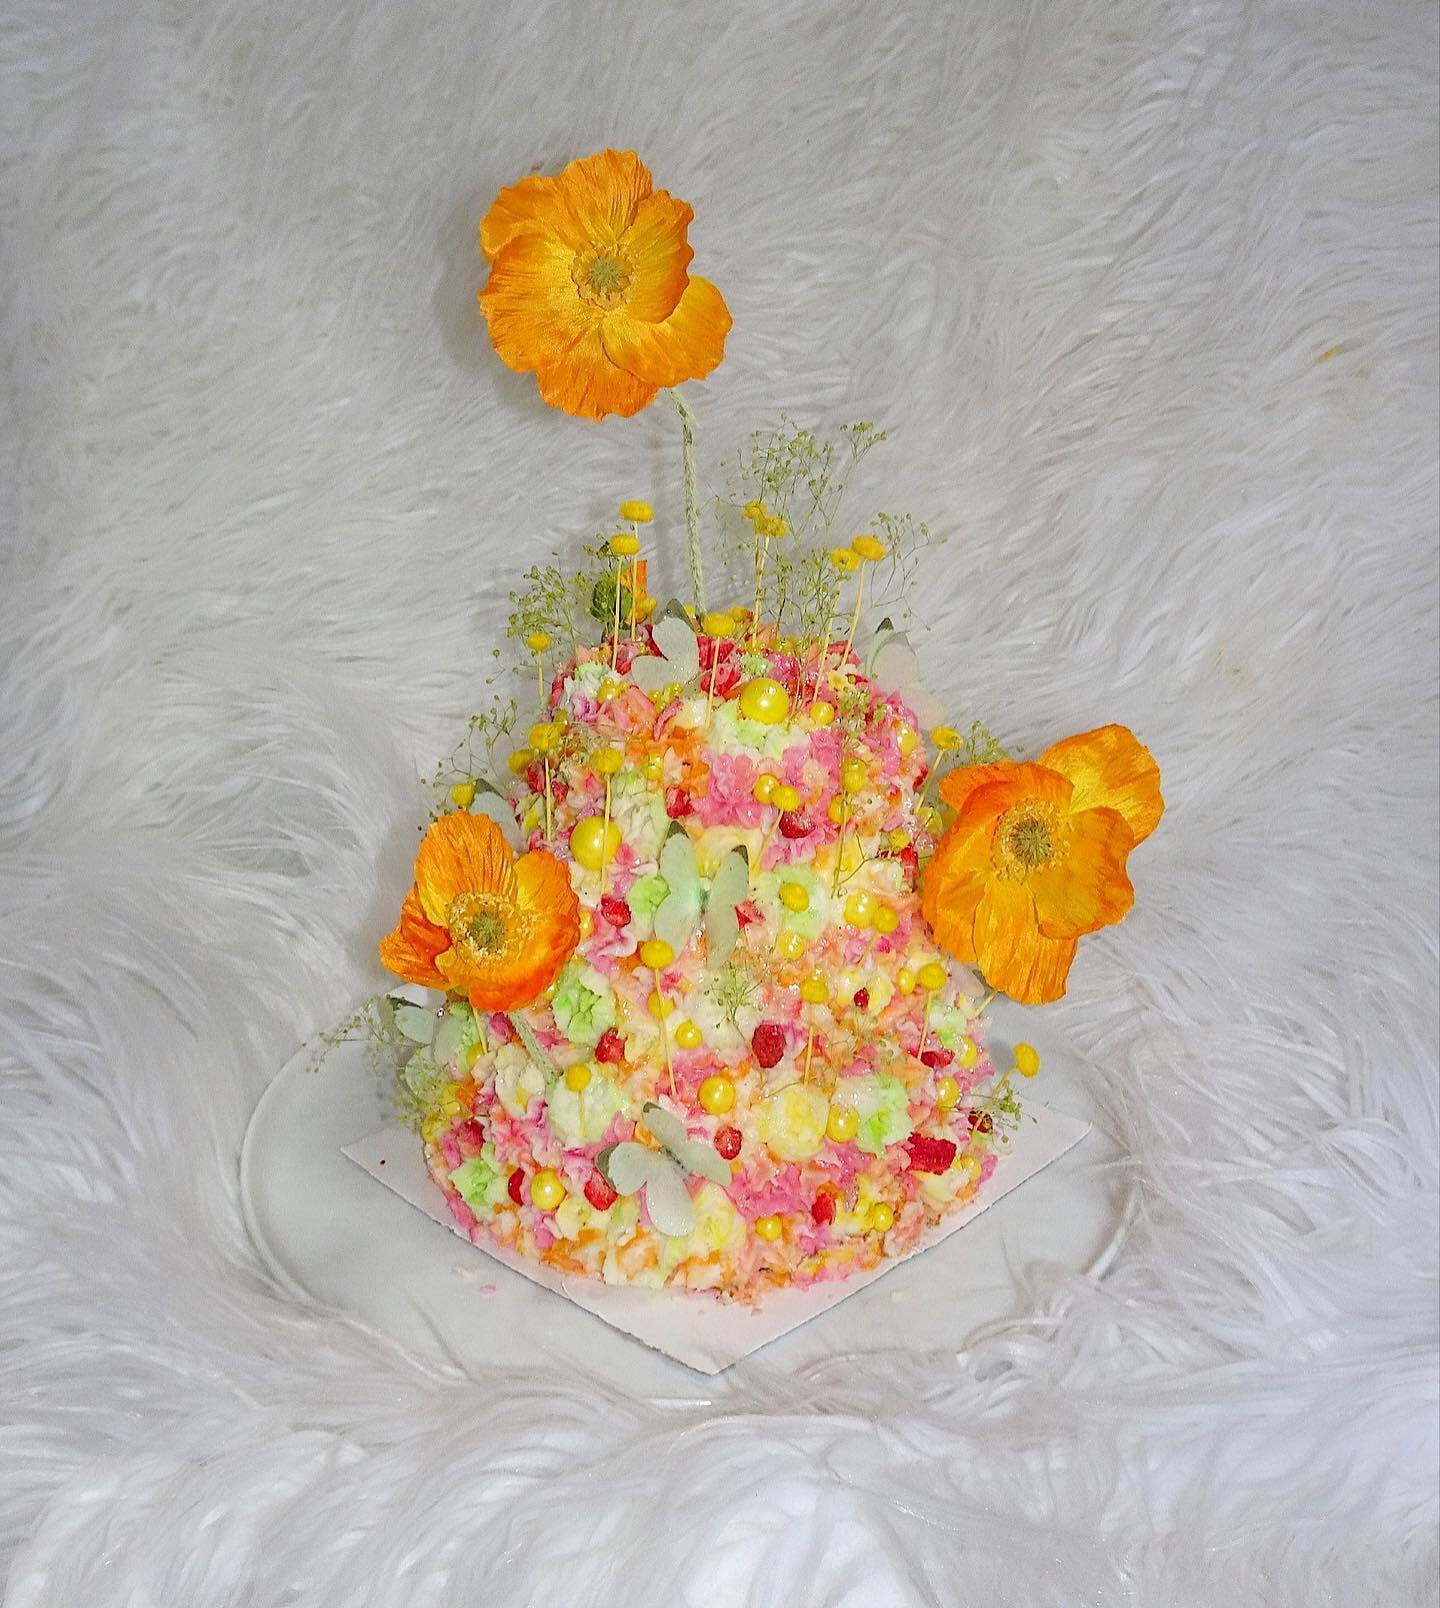 💐𝓖𝓮𝓶𝓲𝓷𝓲 𝓛𝓸𝓿𝓮 𝓢𝓸𝓷𝓰💐 Chai and Almond mini cake 🎂 

#cake #cakedecorating #cakes #birthdaycake #chocolate #food #dessert #cakesofinstagram #birthday #cakedesign #instafood #baking #foodporn #yummy